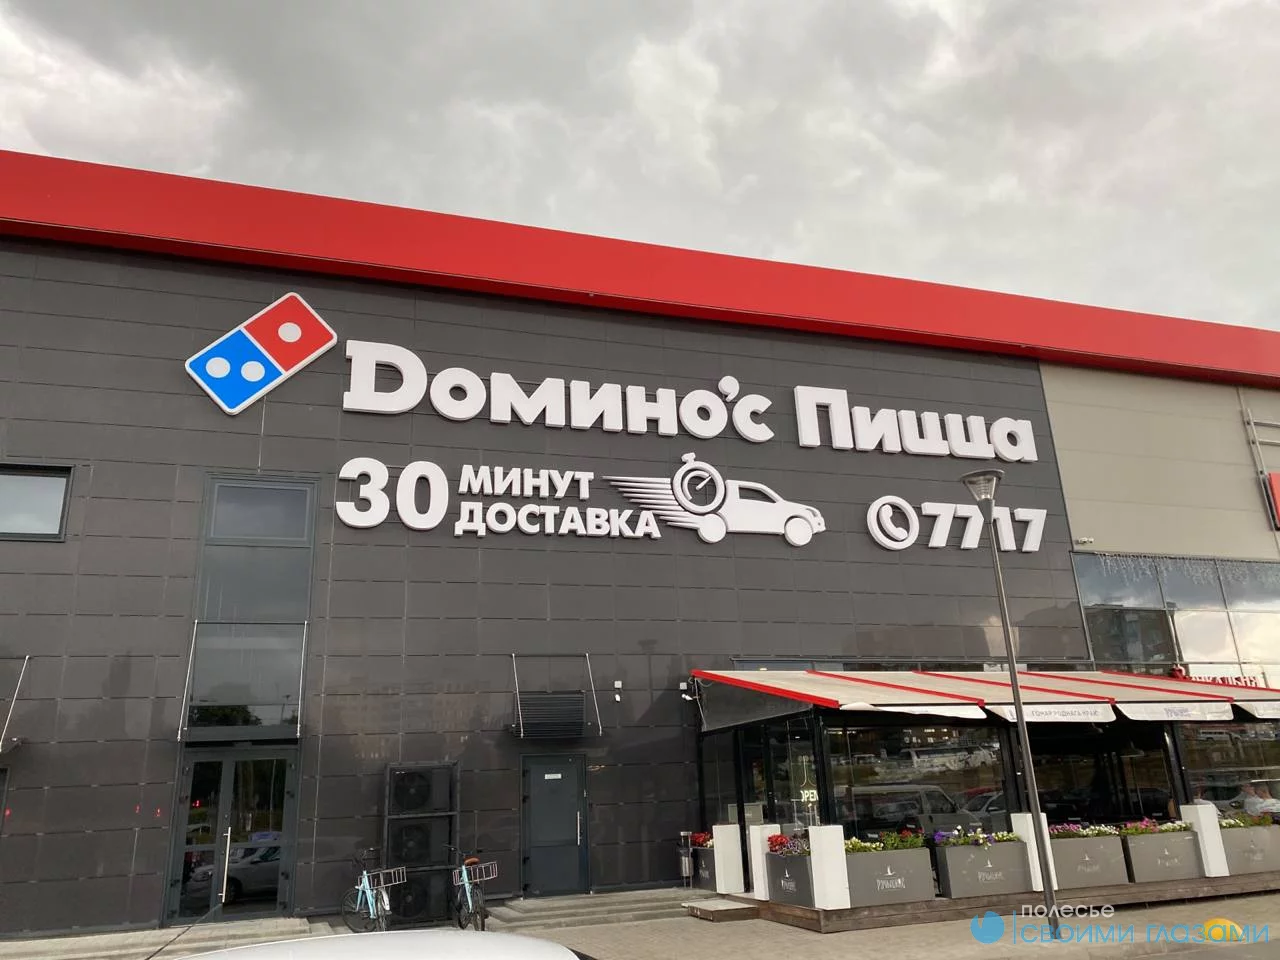 Грандиозное открытие легендарной пиццерии Domino’s Pizza!